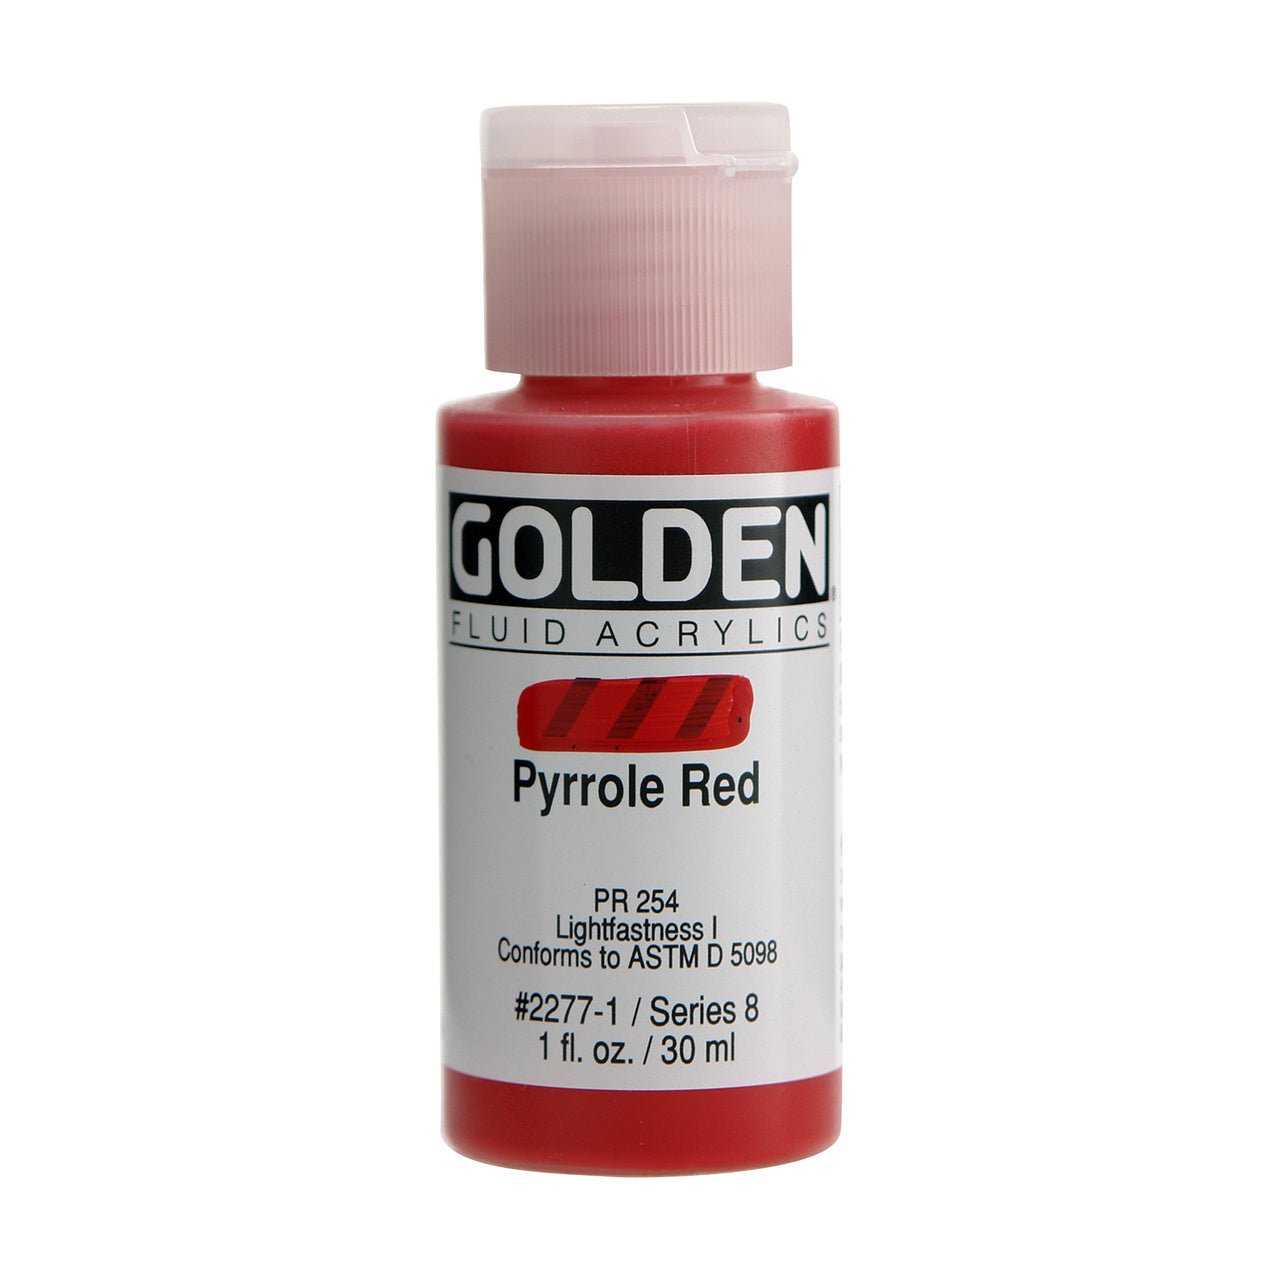 Golden Fluid Acrylic Pyrrole Red 1 oz - merriartist.com